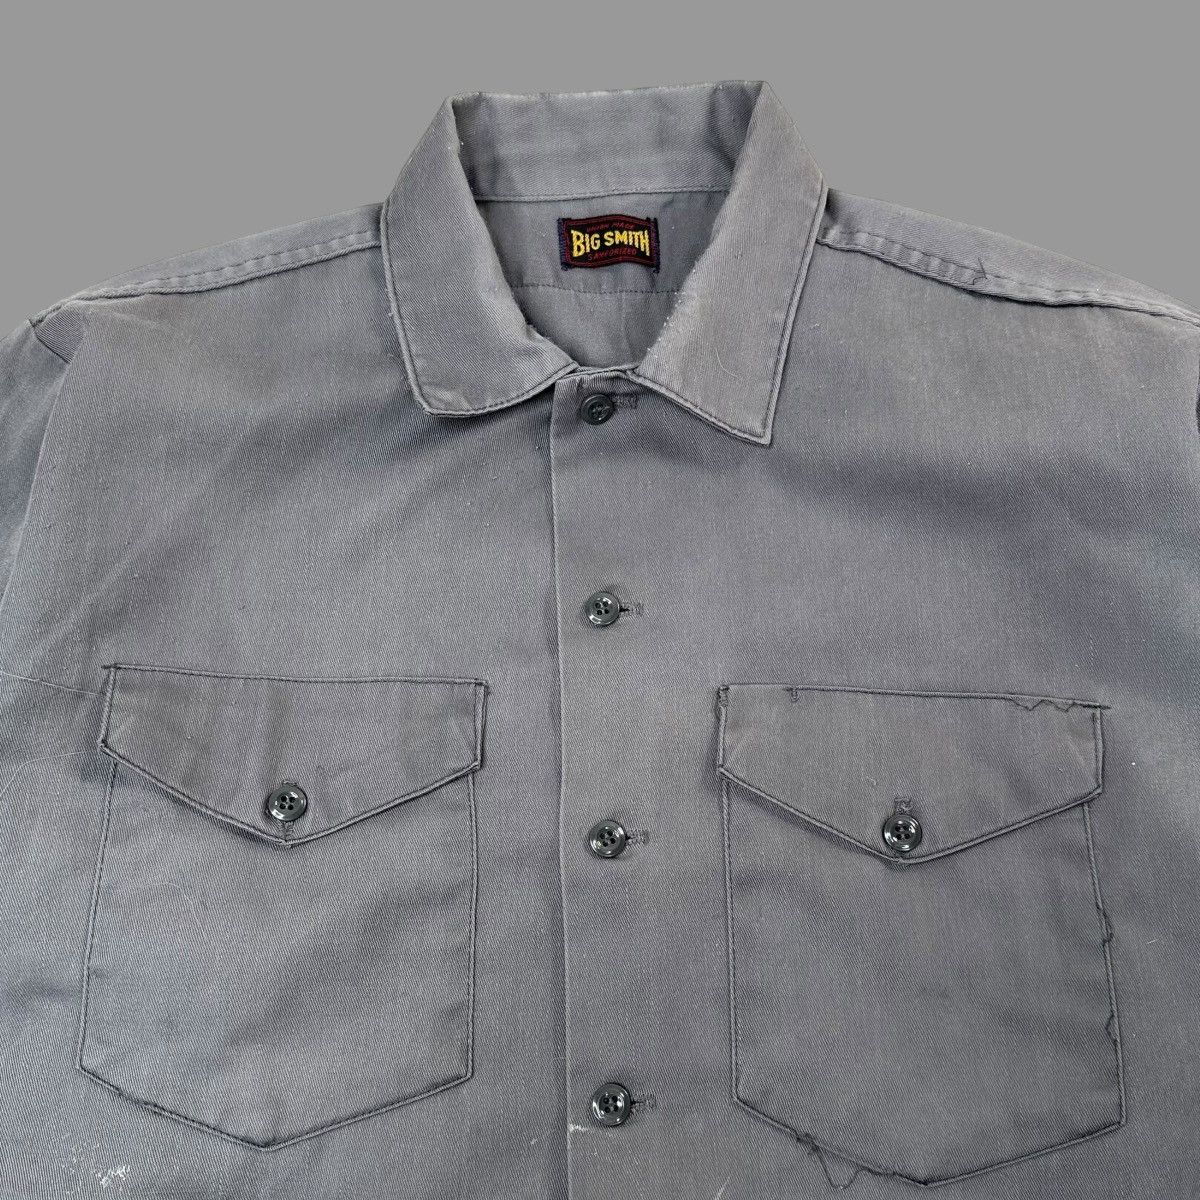 Vintage Vintage 1950s big smith mechanic work shirt Size US M / EU 48-50 / 2 - 3 Thumbnail